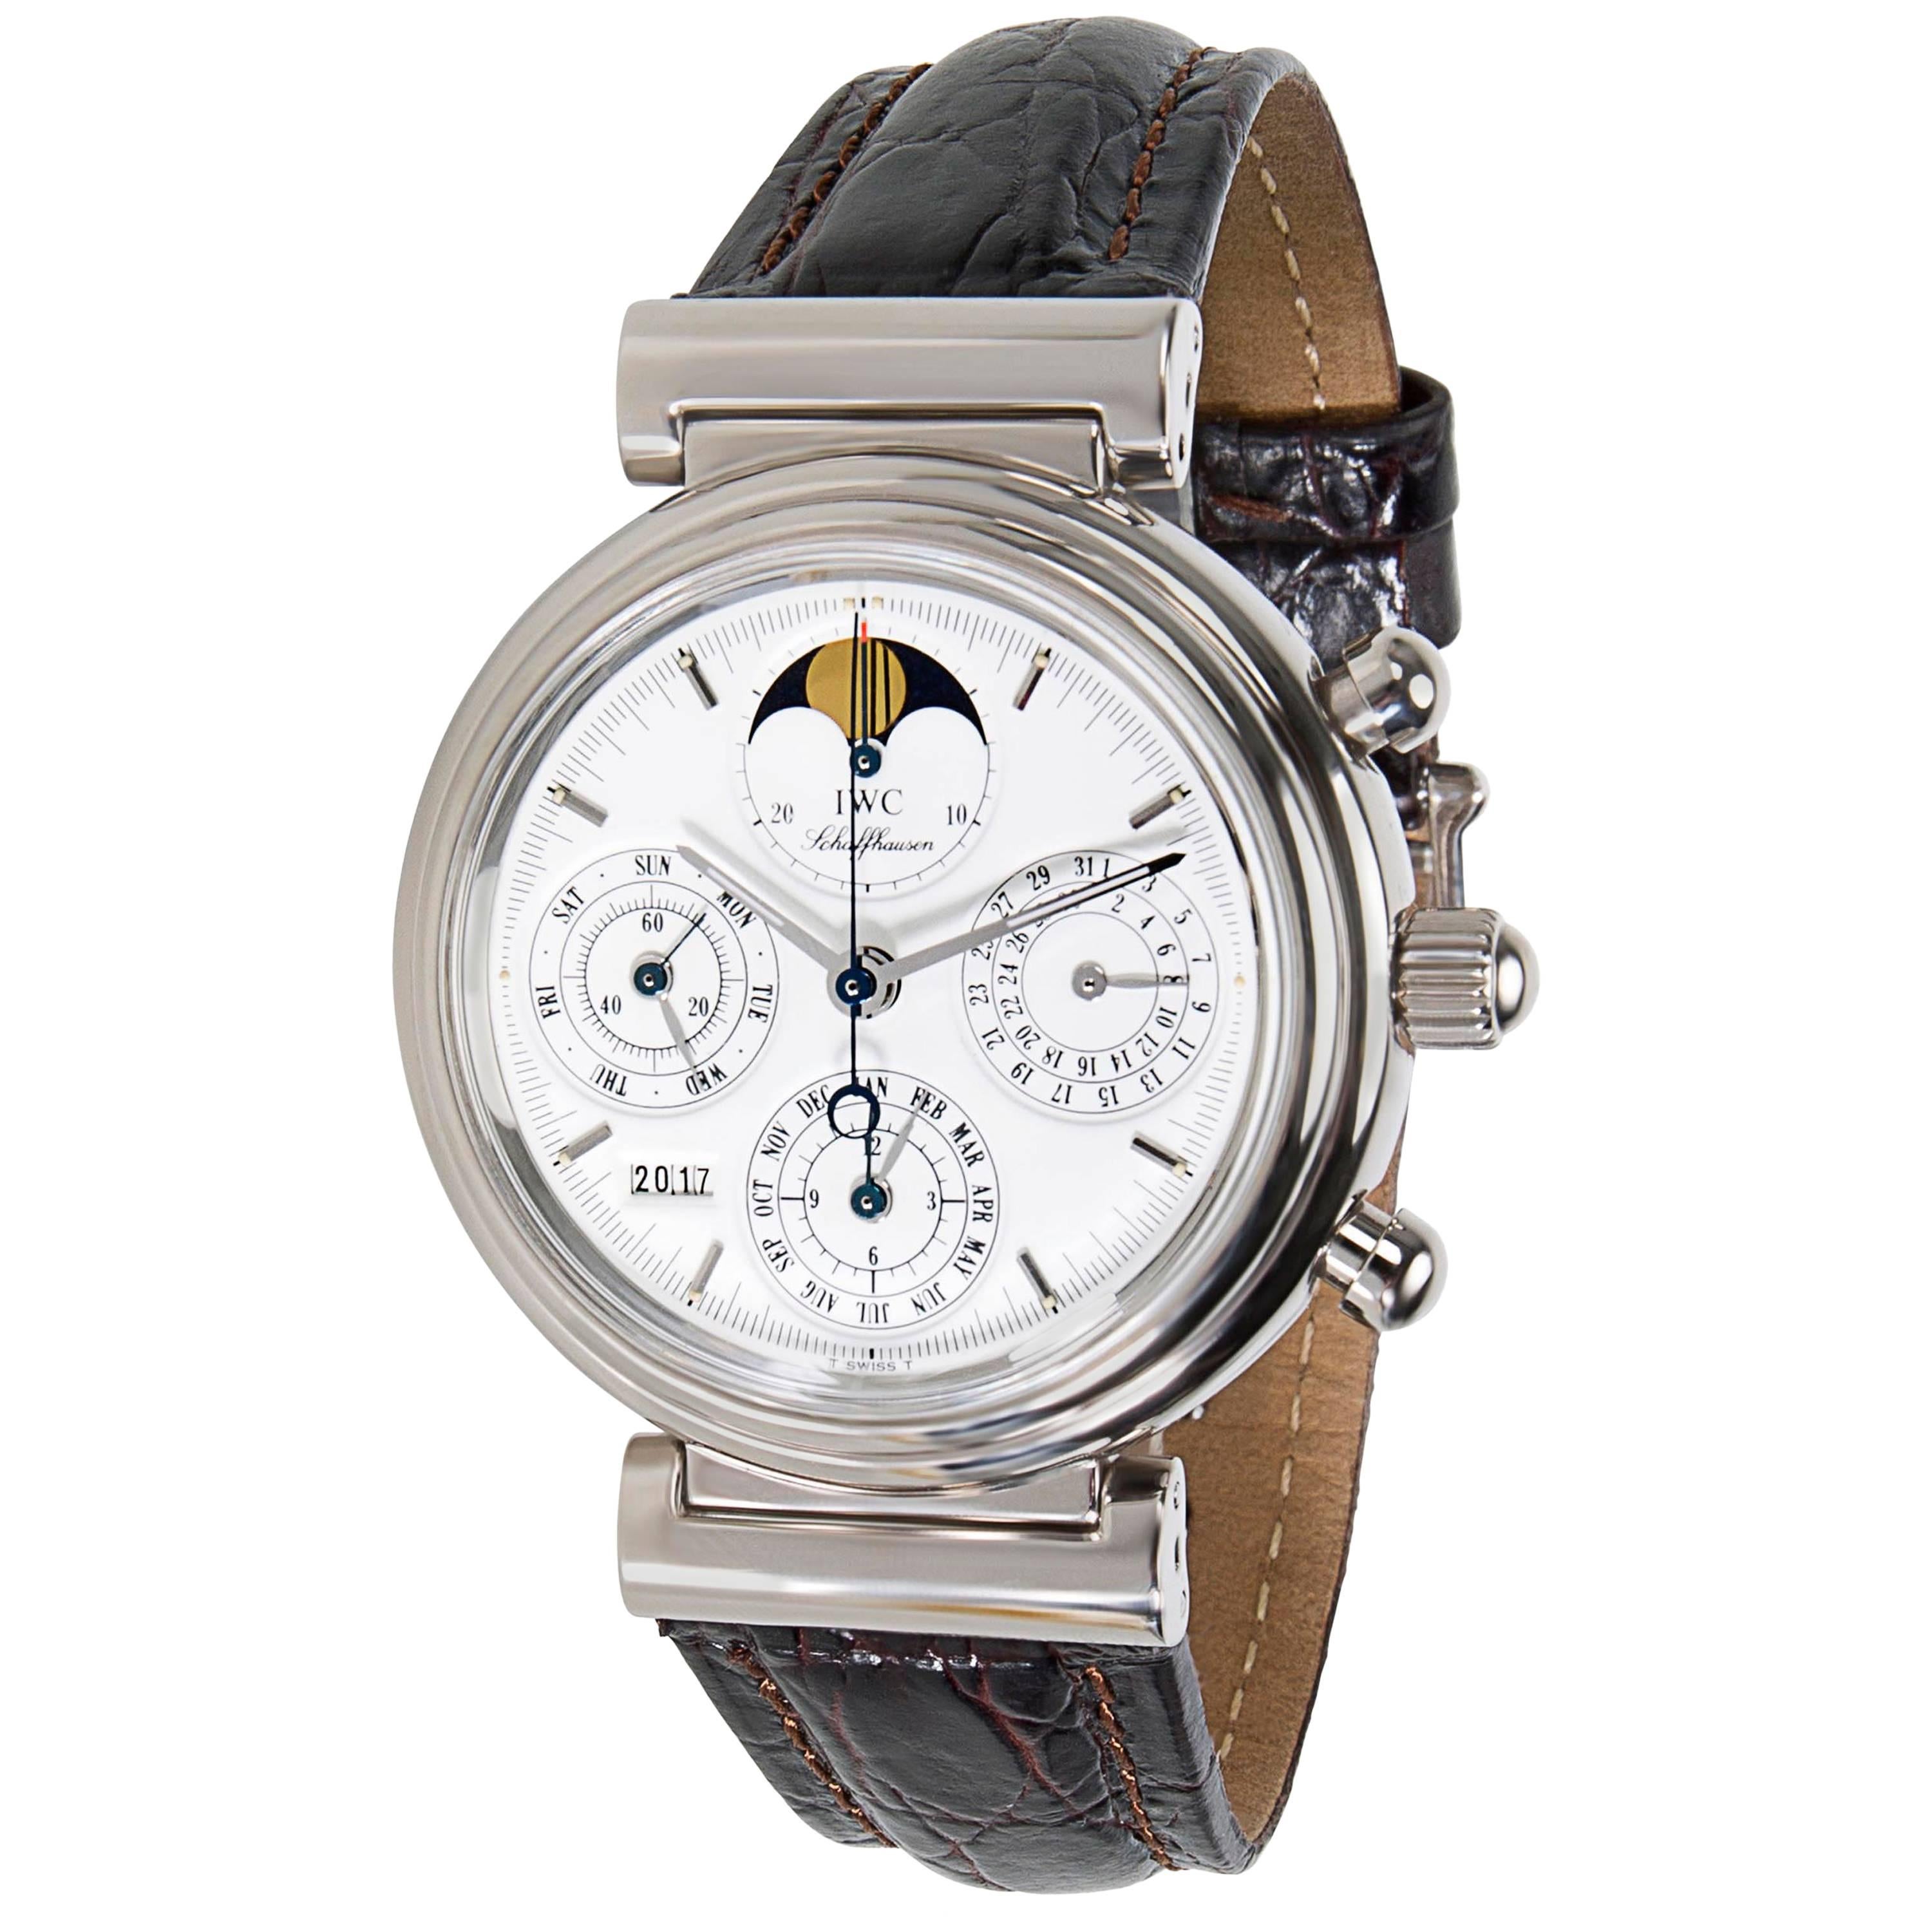 IWC Da Vinci 3750 Moon Phase Men's Chronograph Watch in Gold